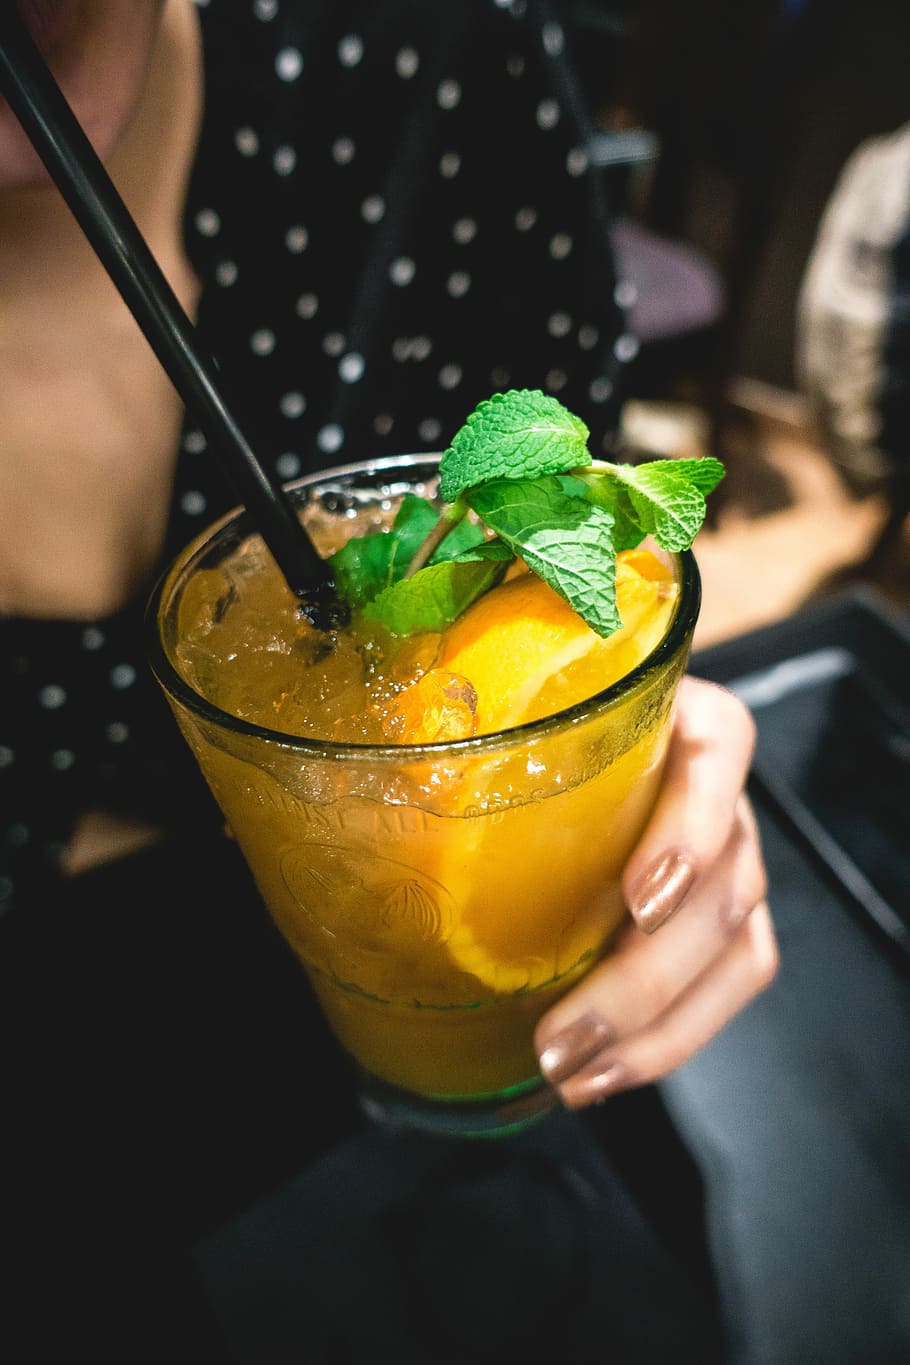 Orange juice drink with mint, bar, close up, hands, cocktail